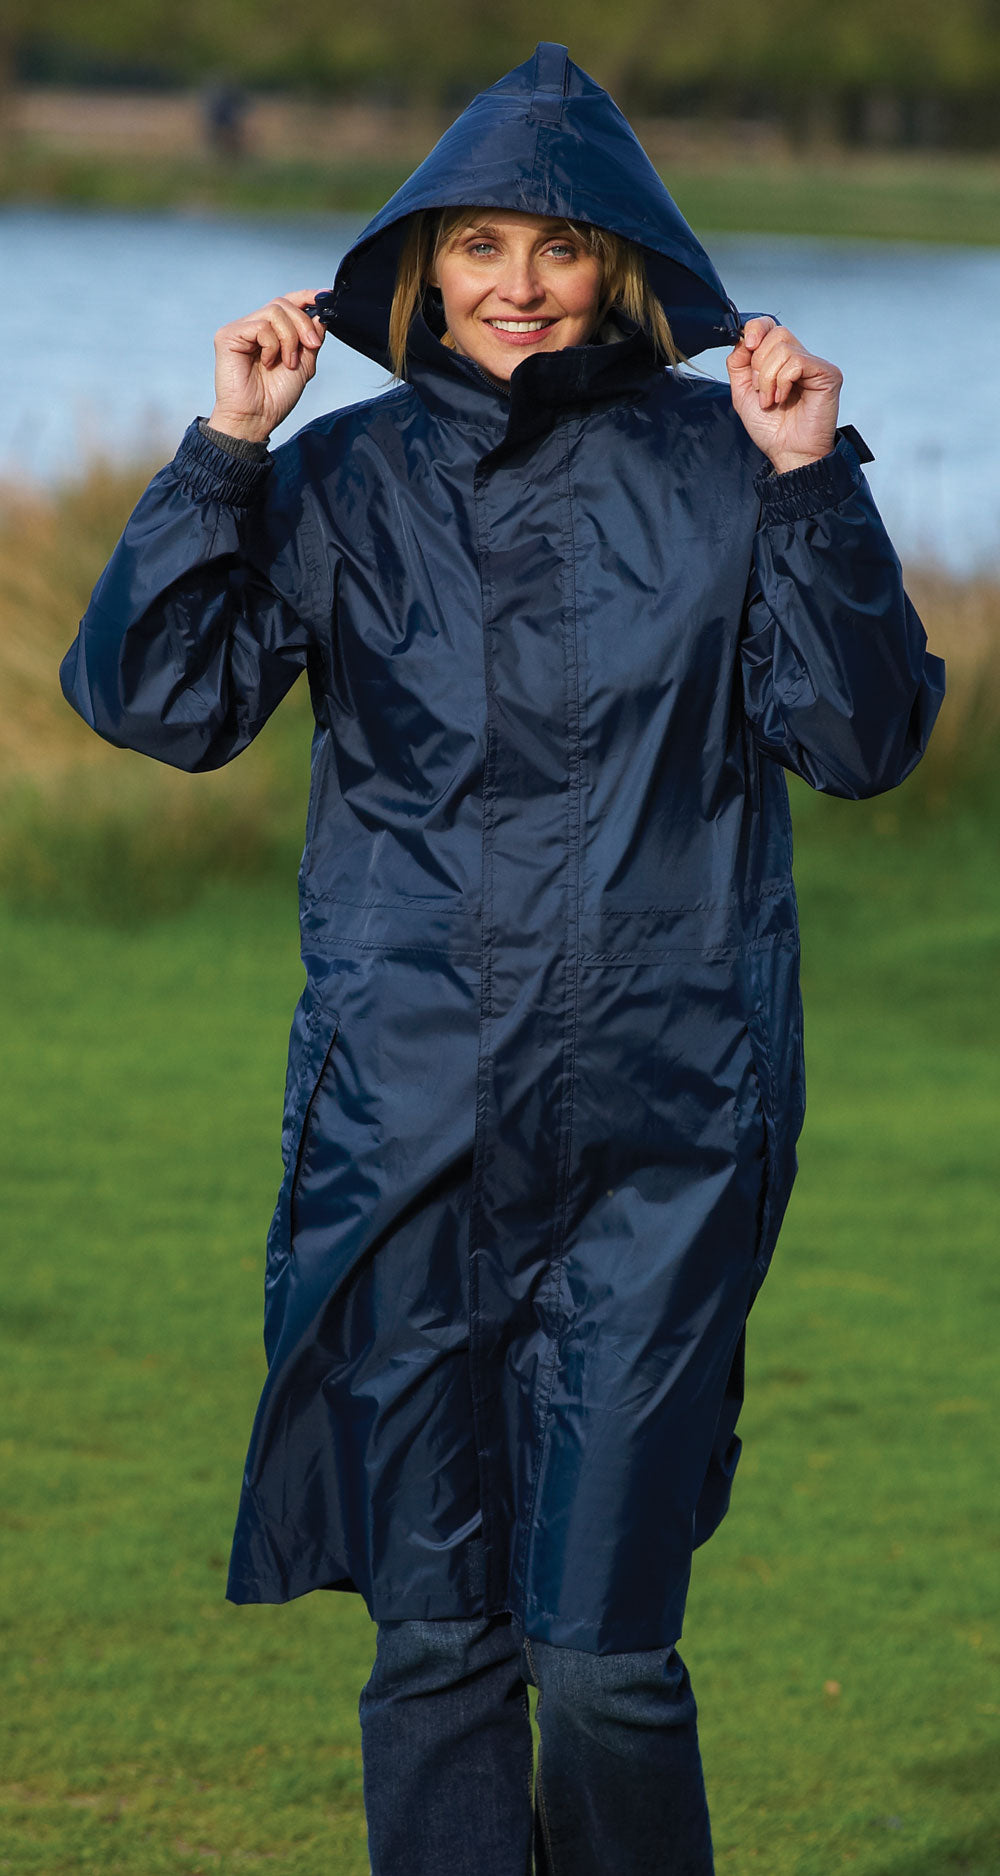 Champion Storm waterproof raincoat  with hood worn by woman.